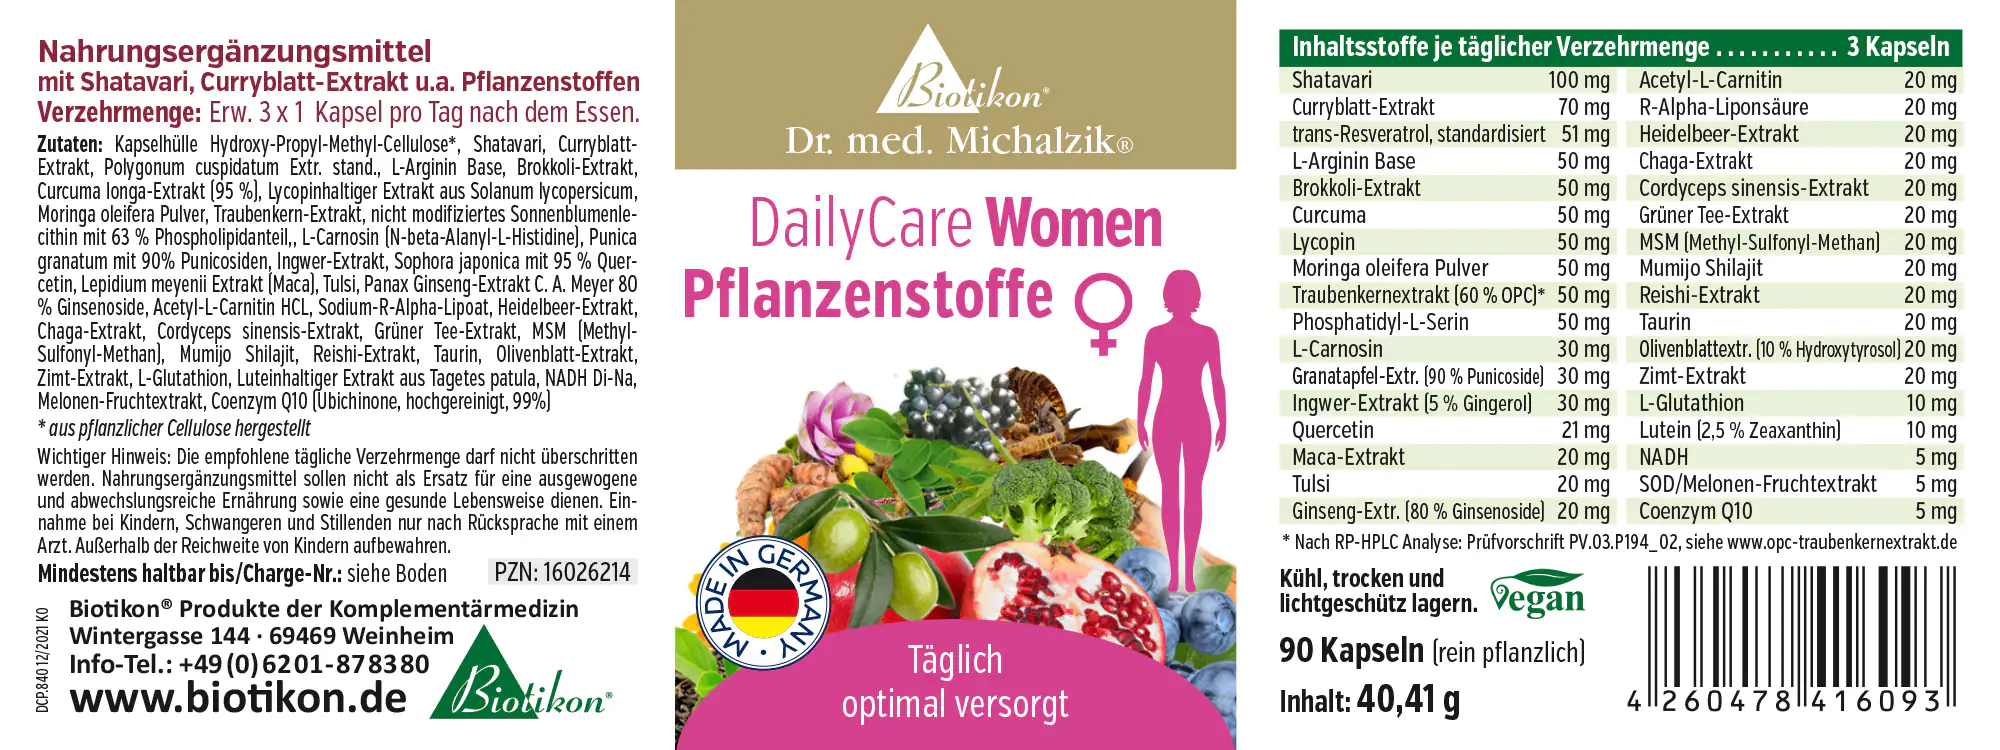 DailyCare Women Pflanzenstoffe